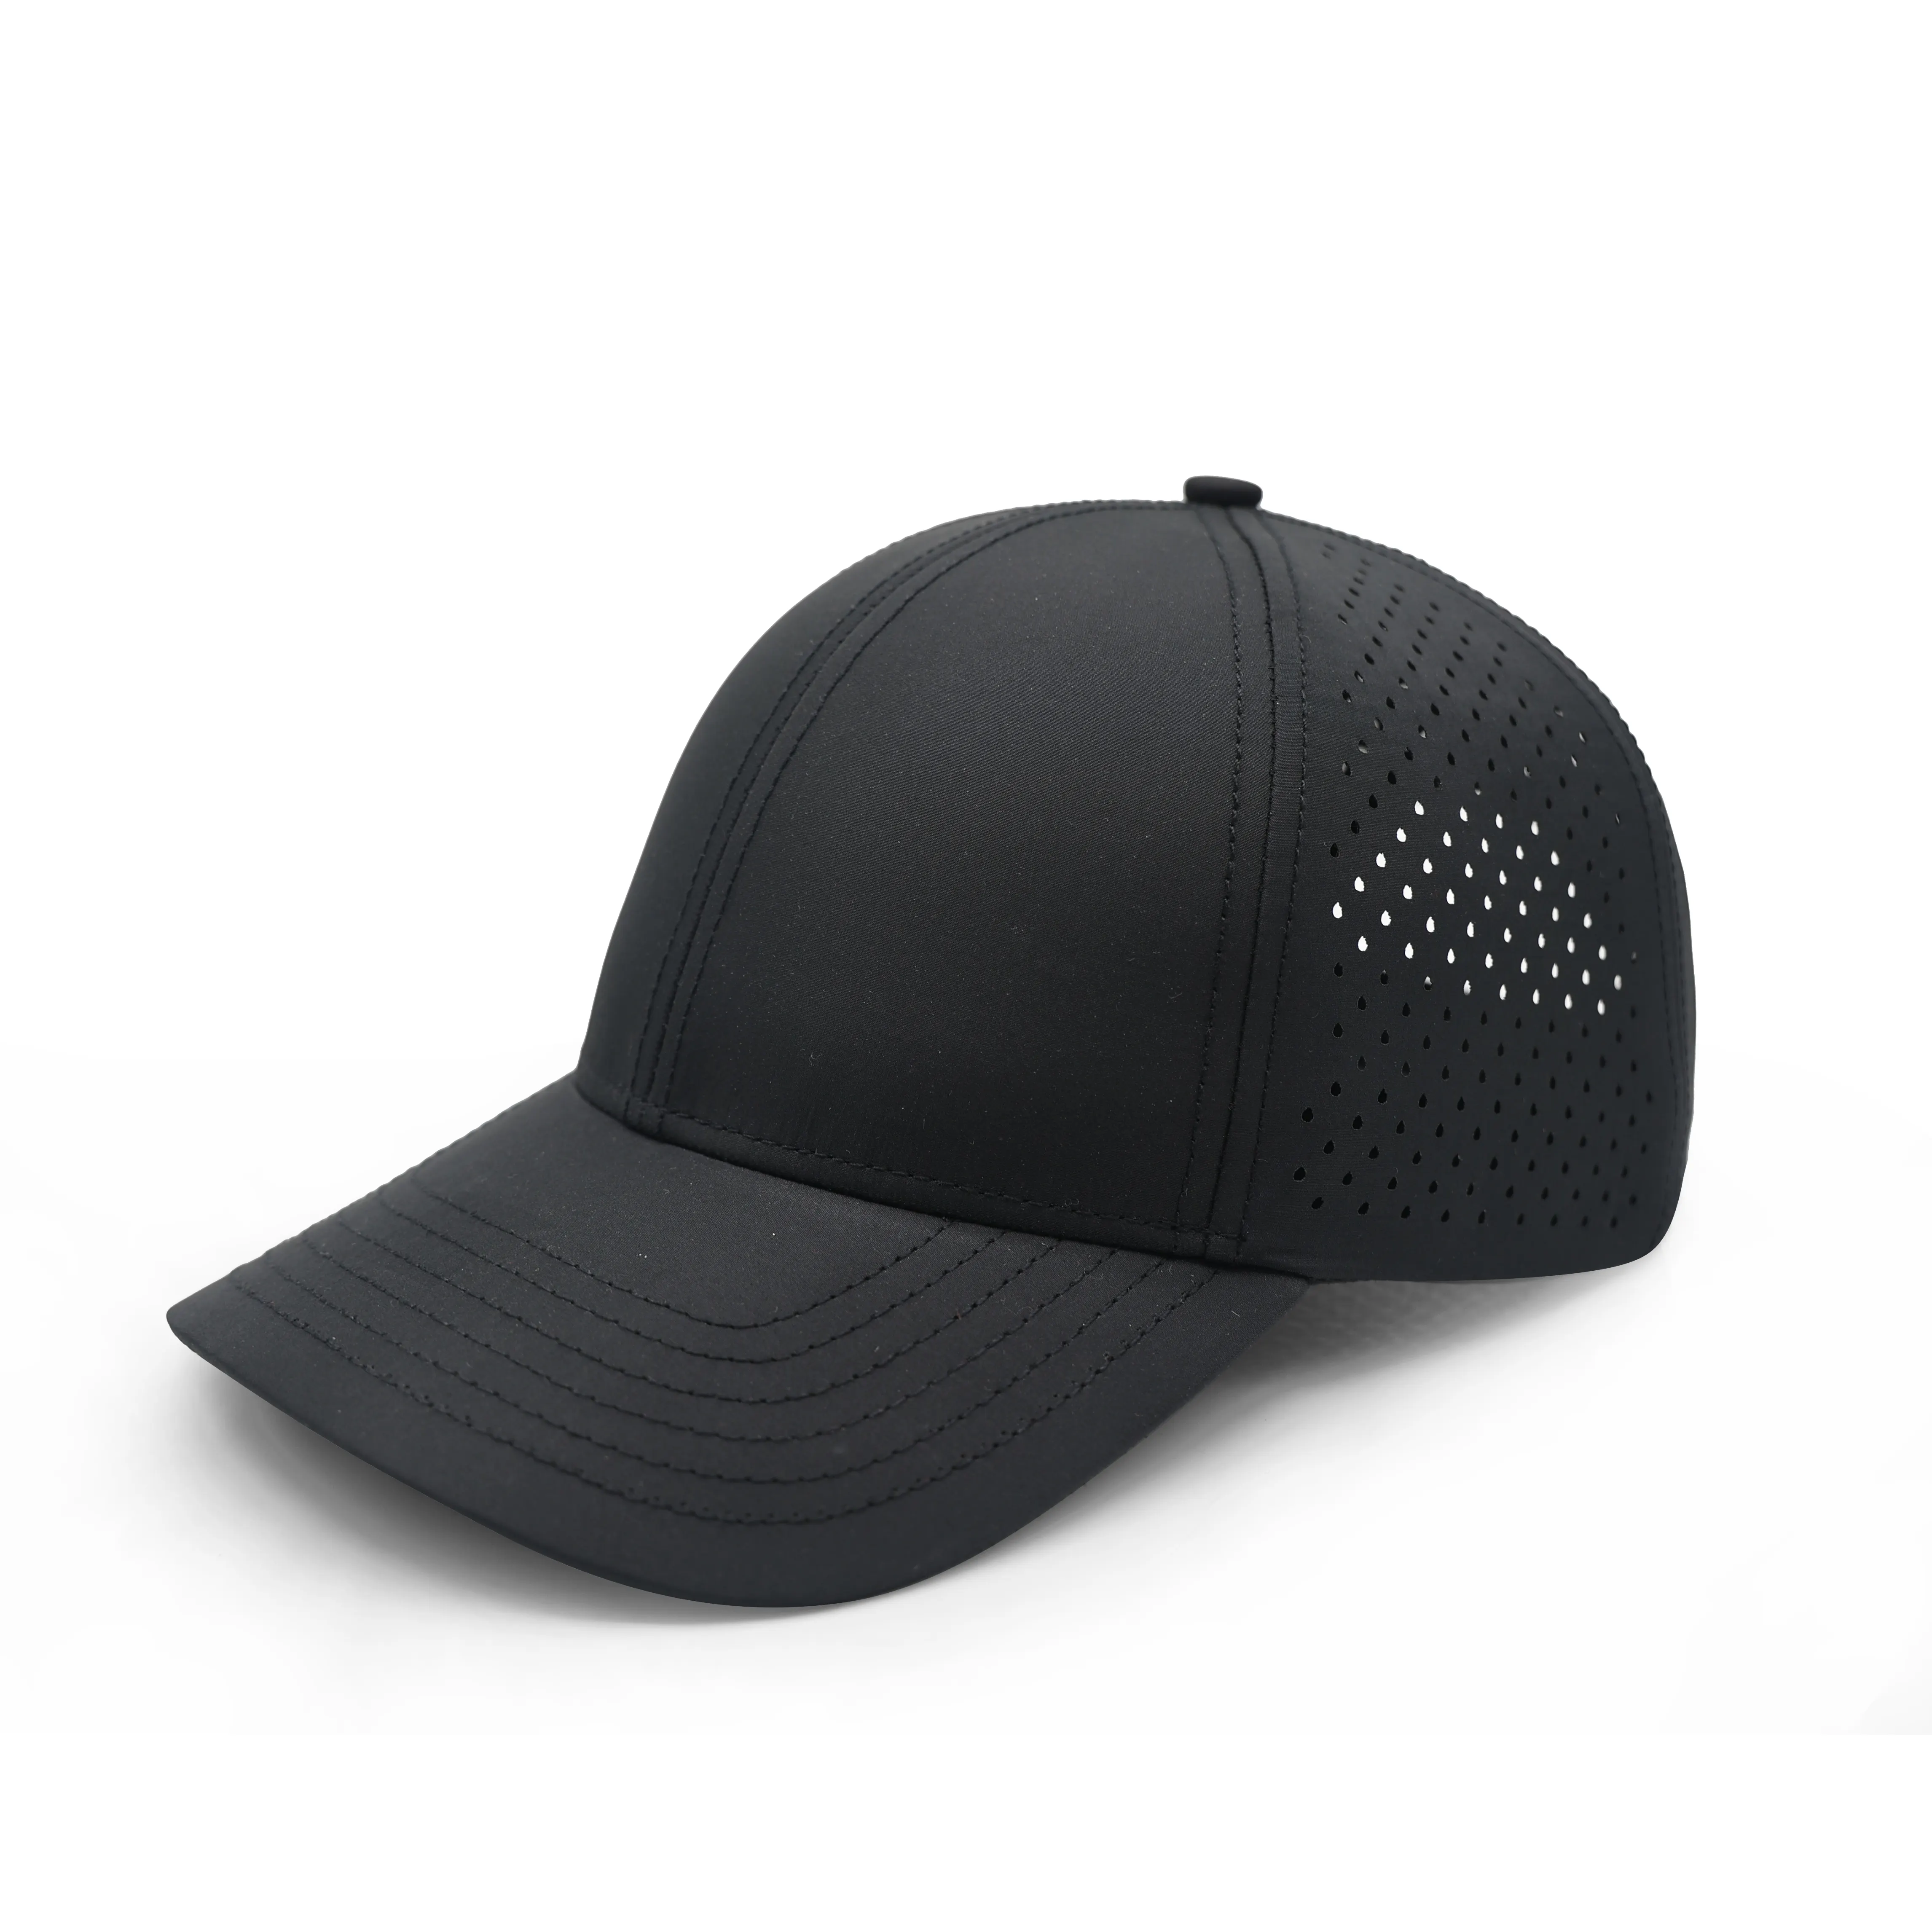 China manufacture Curved brim custom golf cap 6 panel Laser Cut Hole Perforated Hat Golf Hat